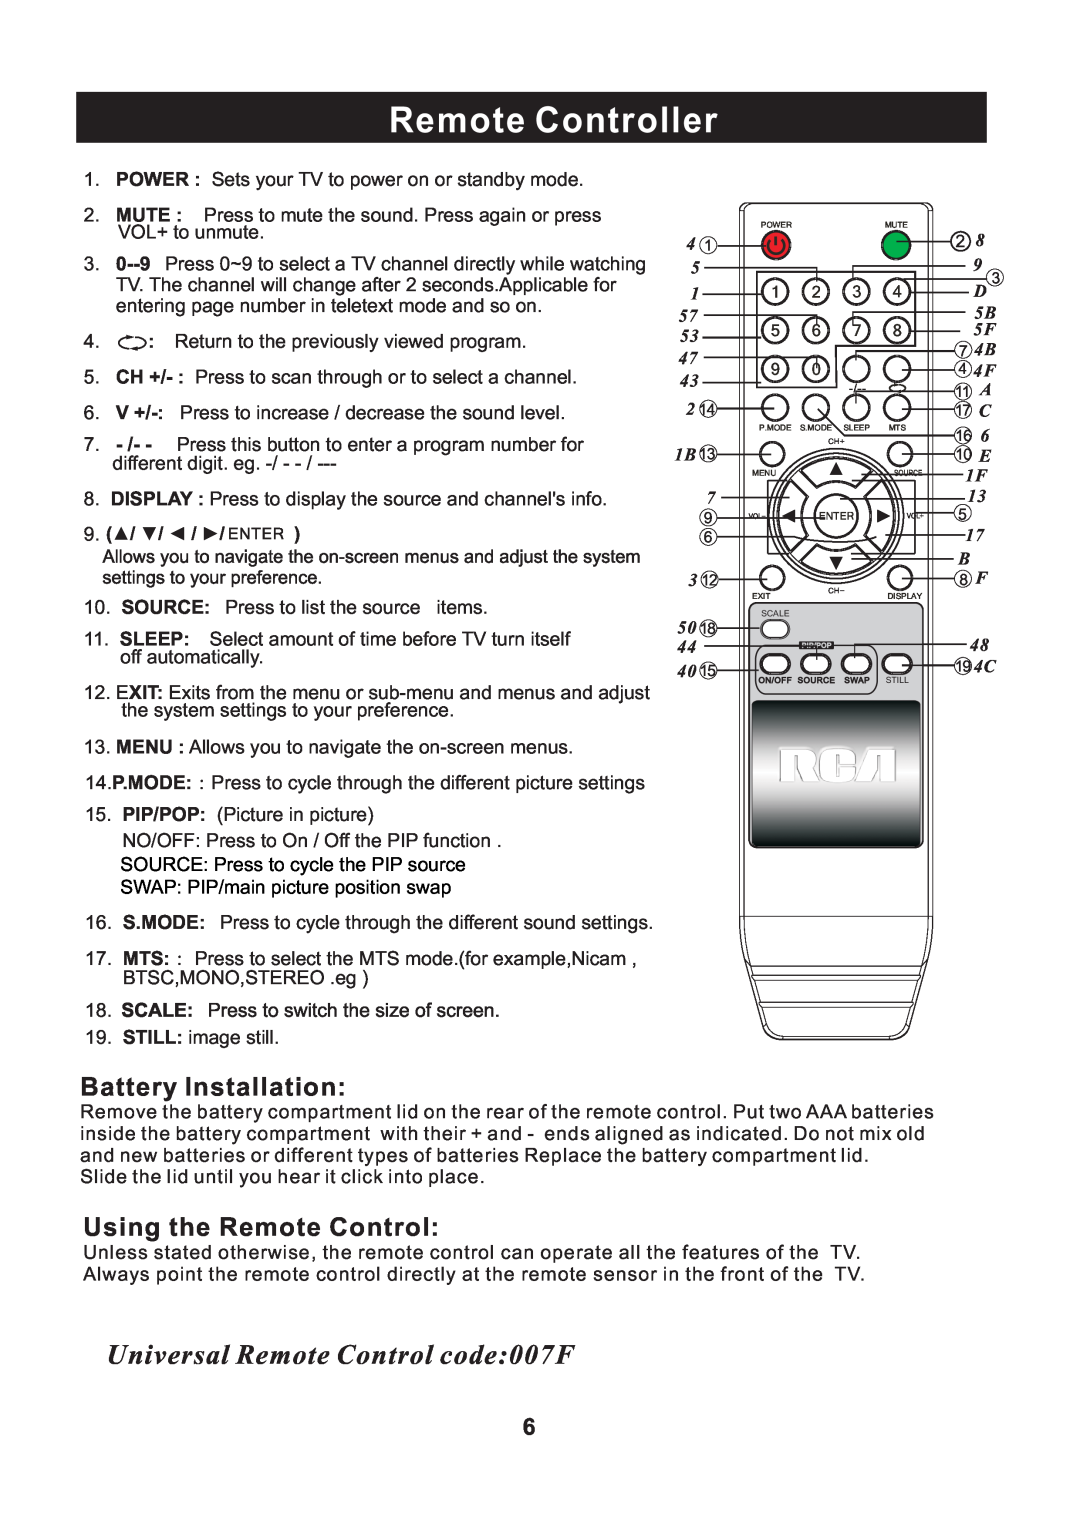 RCA RLC2609 Remote Controller, Battery Installation, Using the Remote Control, Universal Remote Control code007F 